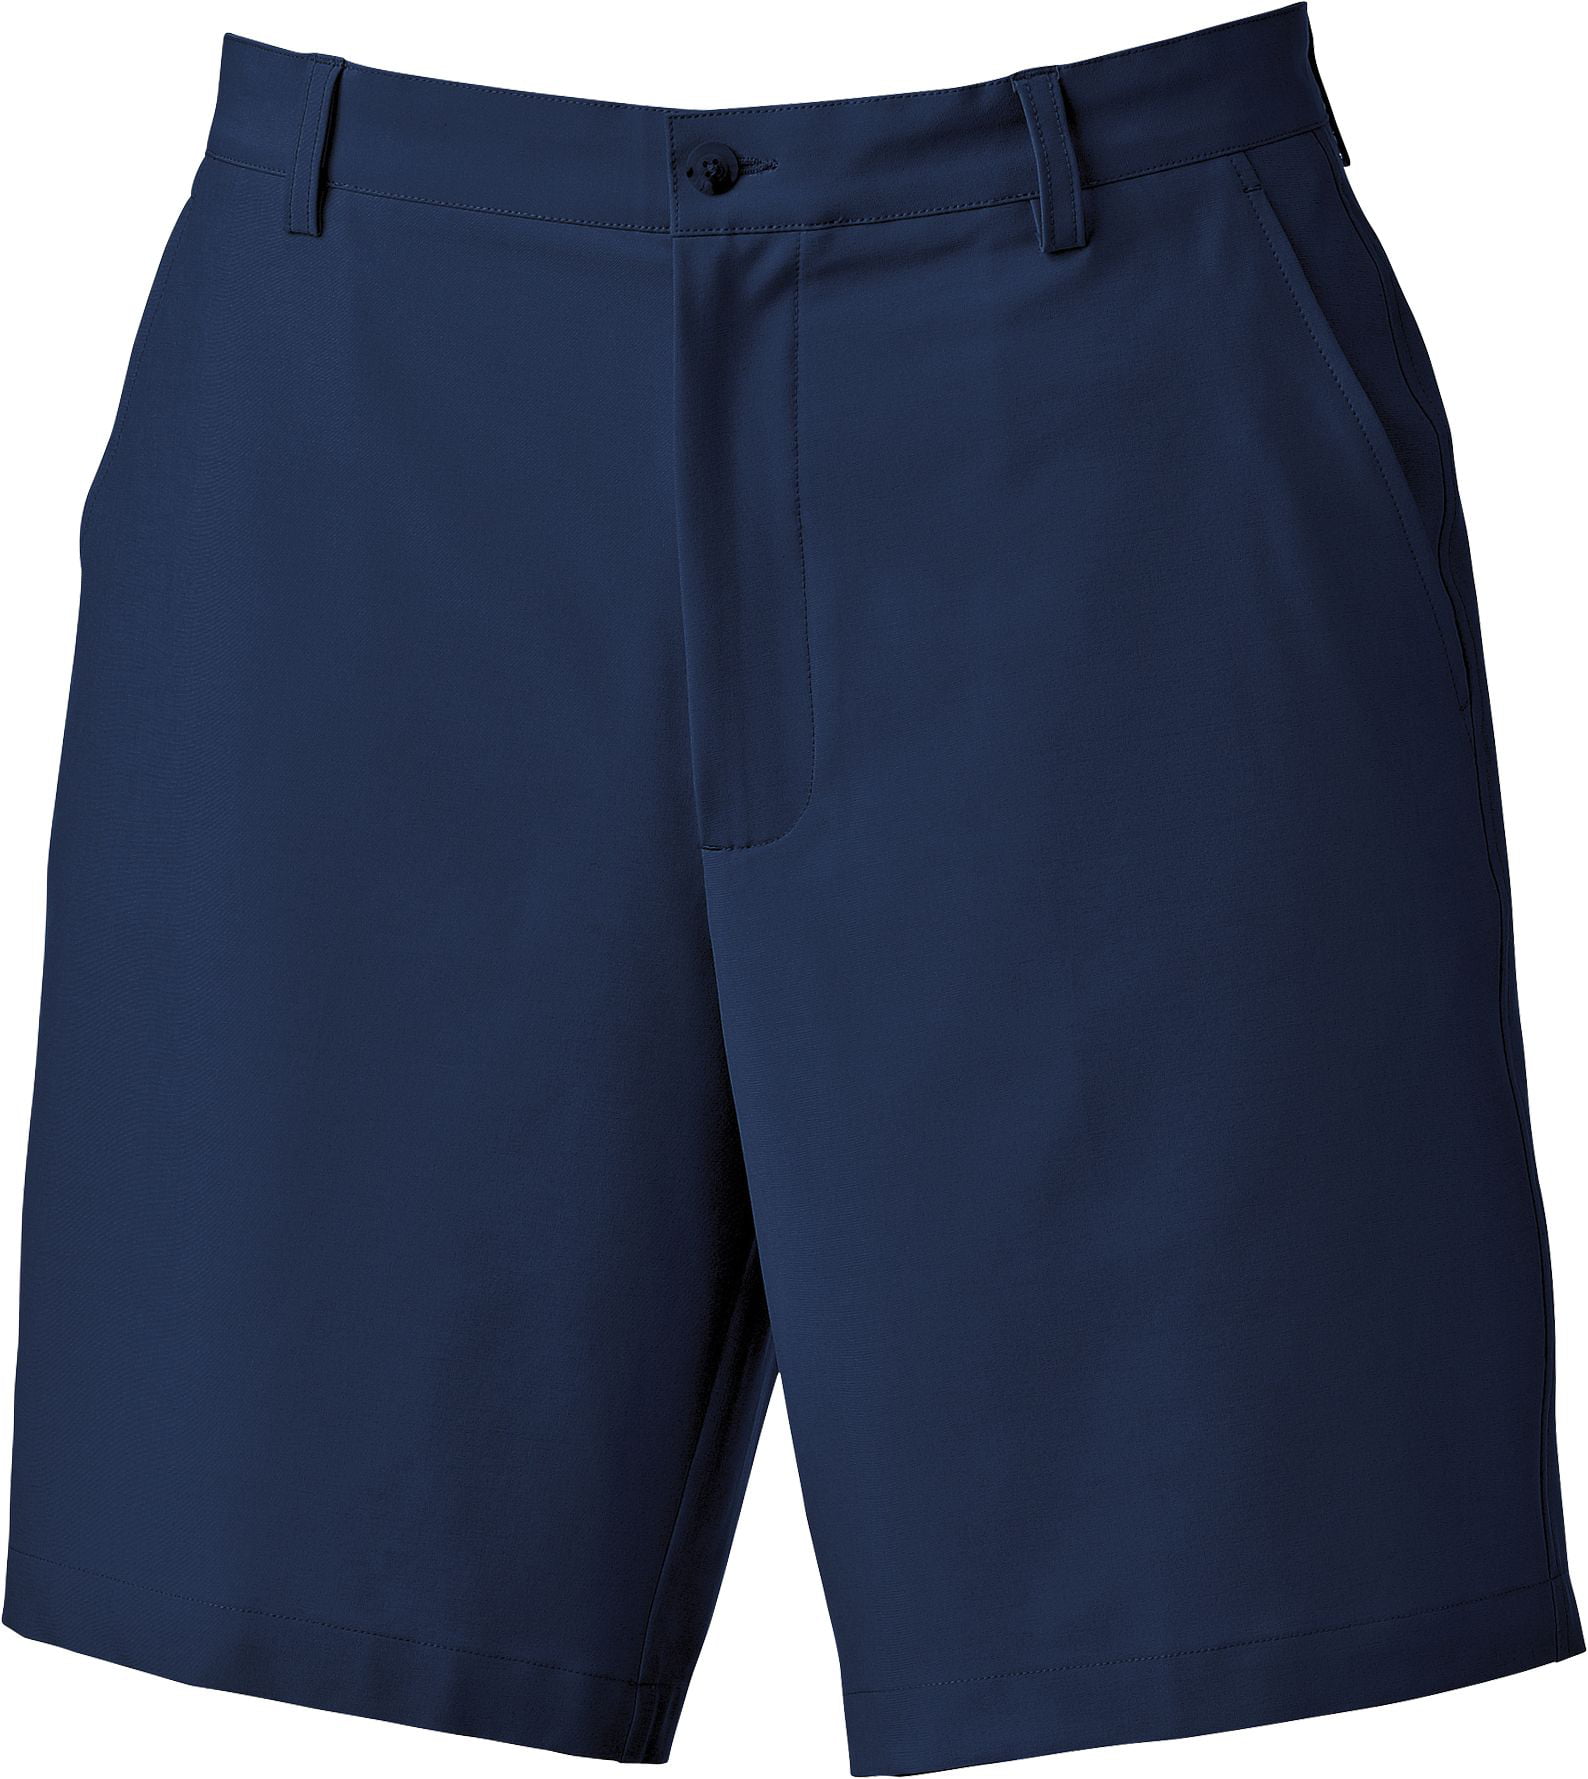 footjoy men's performance golf shorts - Walmart.com